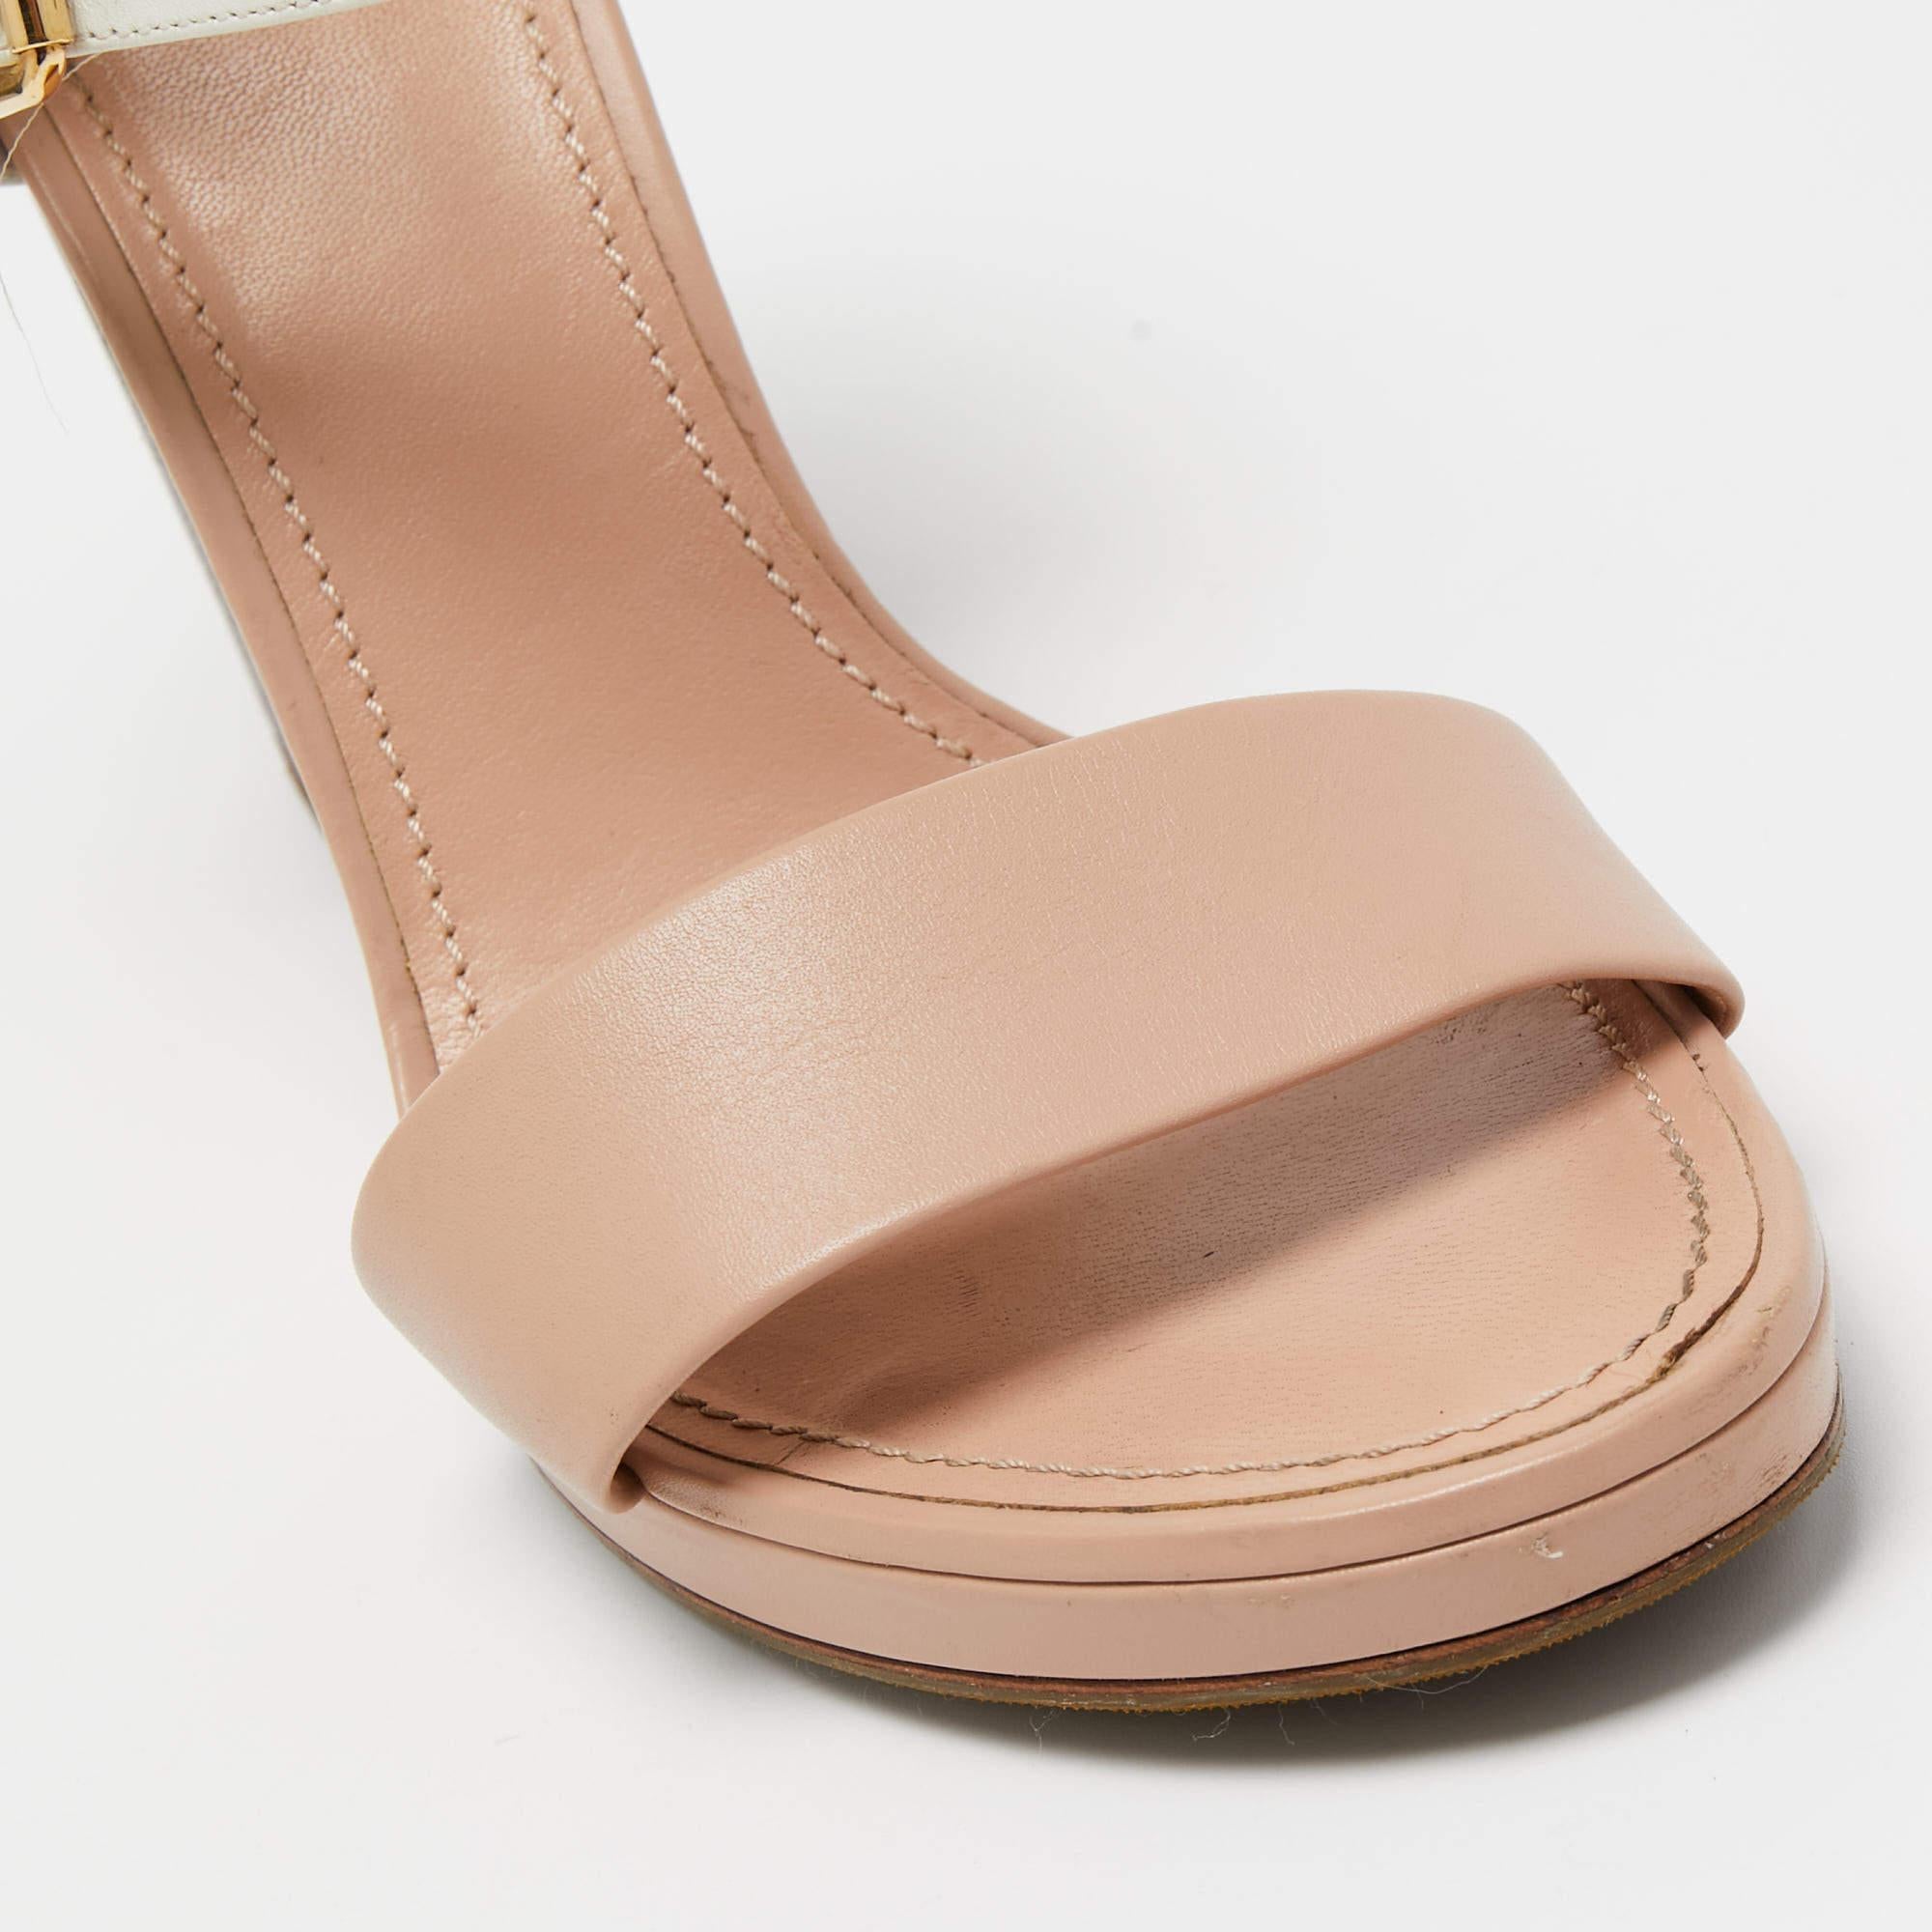 Louis Vuitton Leather and Monogram Canvas Double Strap Sandals Size 38.5 In Good Condition For Sale In Dubai, Al Qouz 2